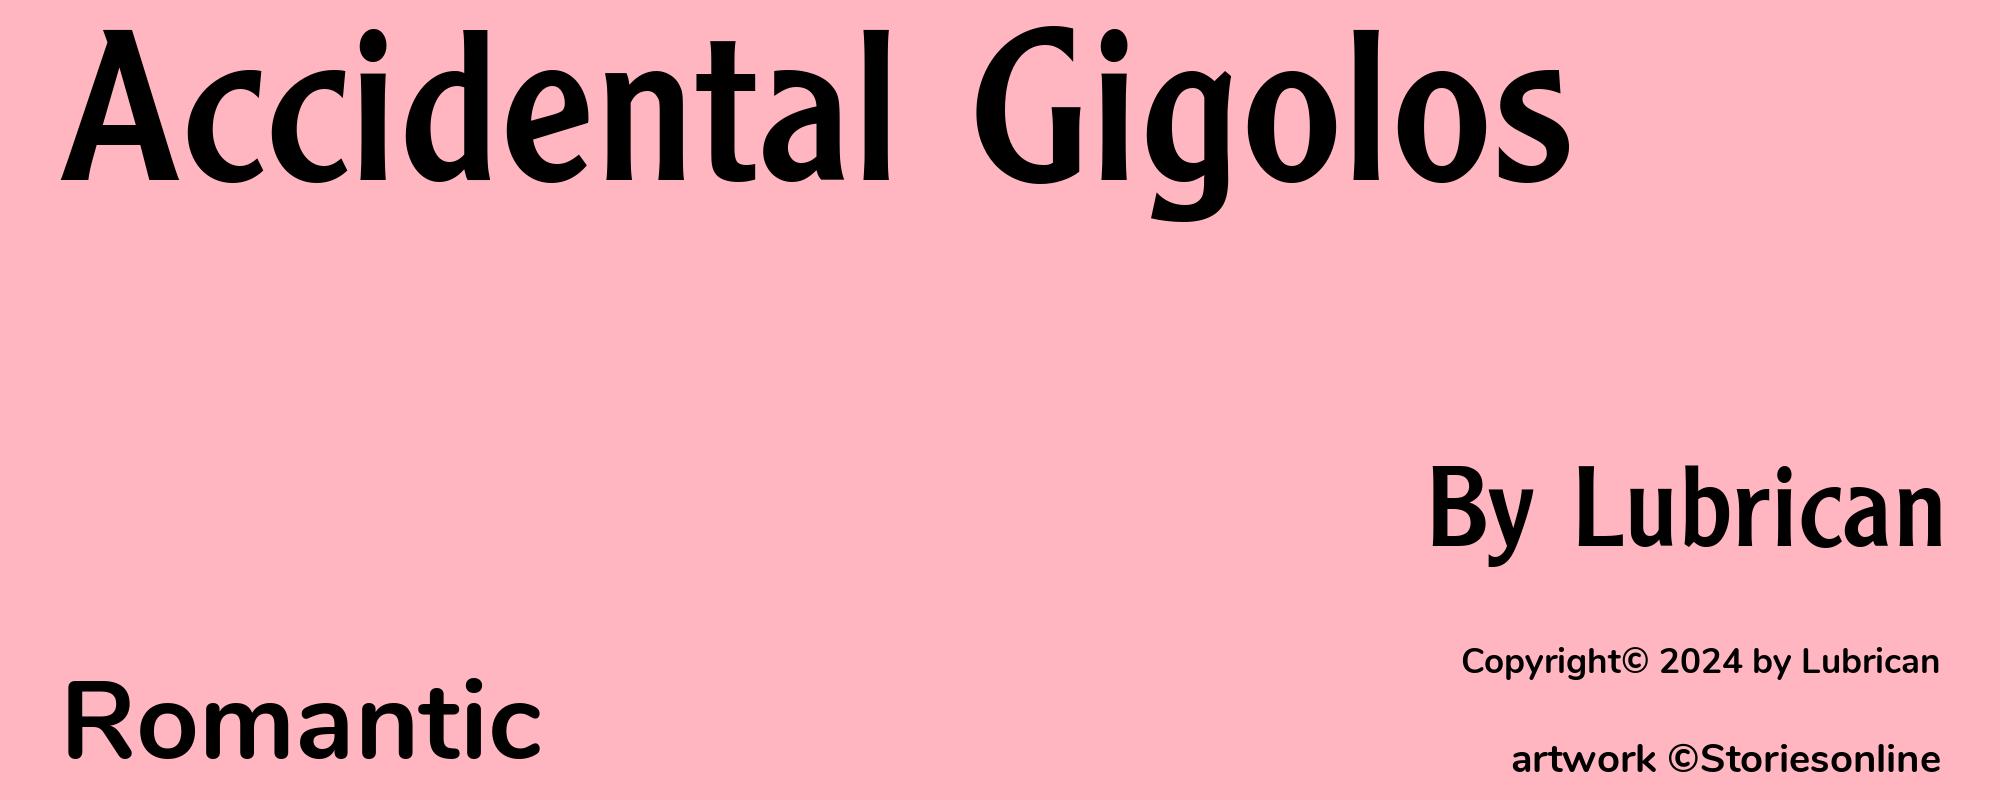 Accidental Gigolos - Cover